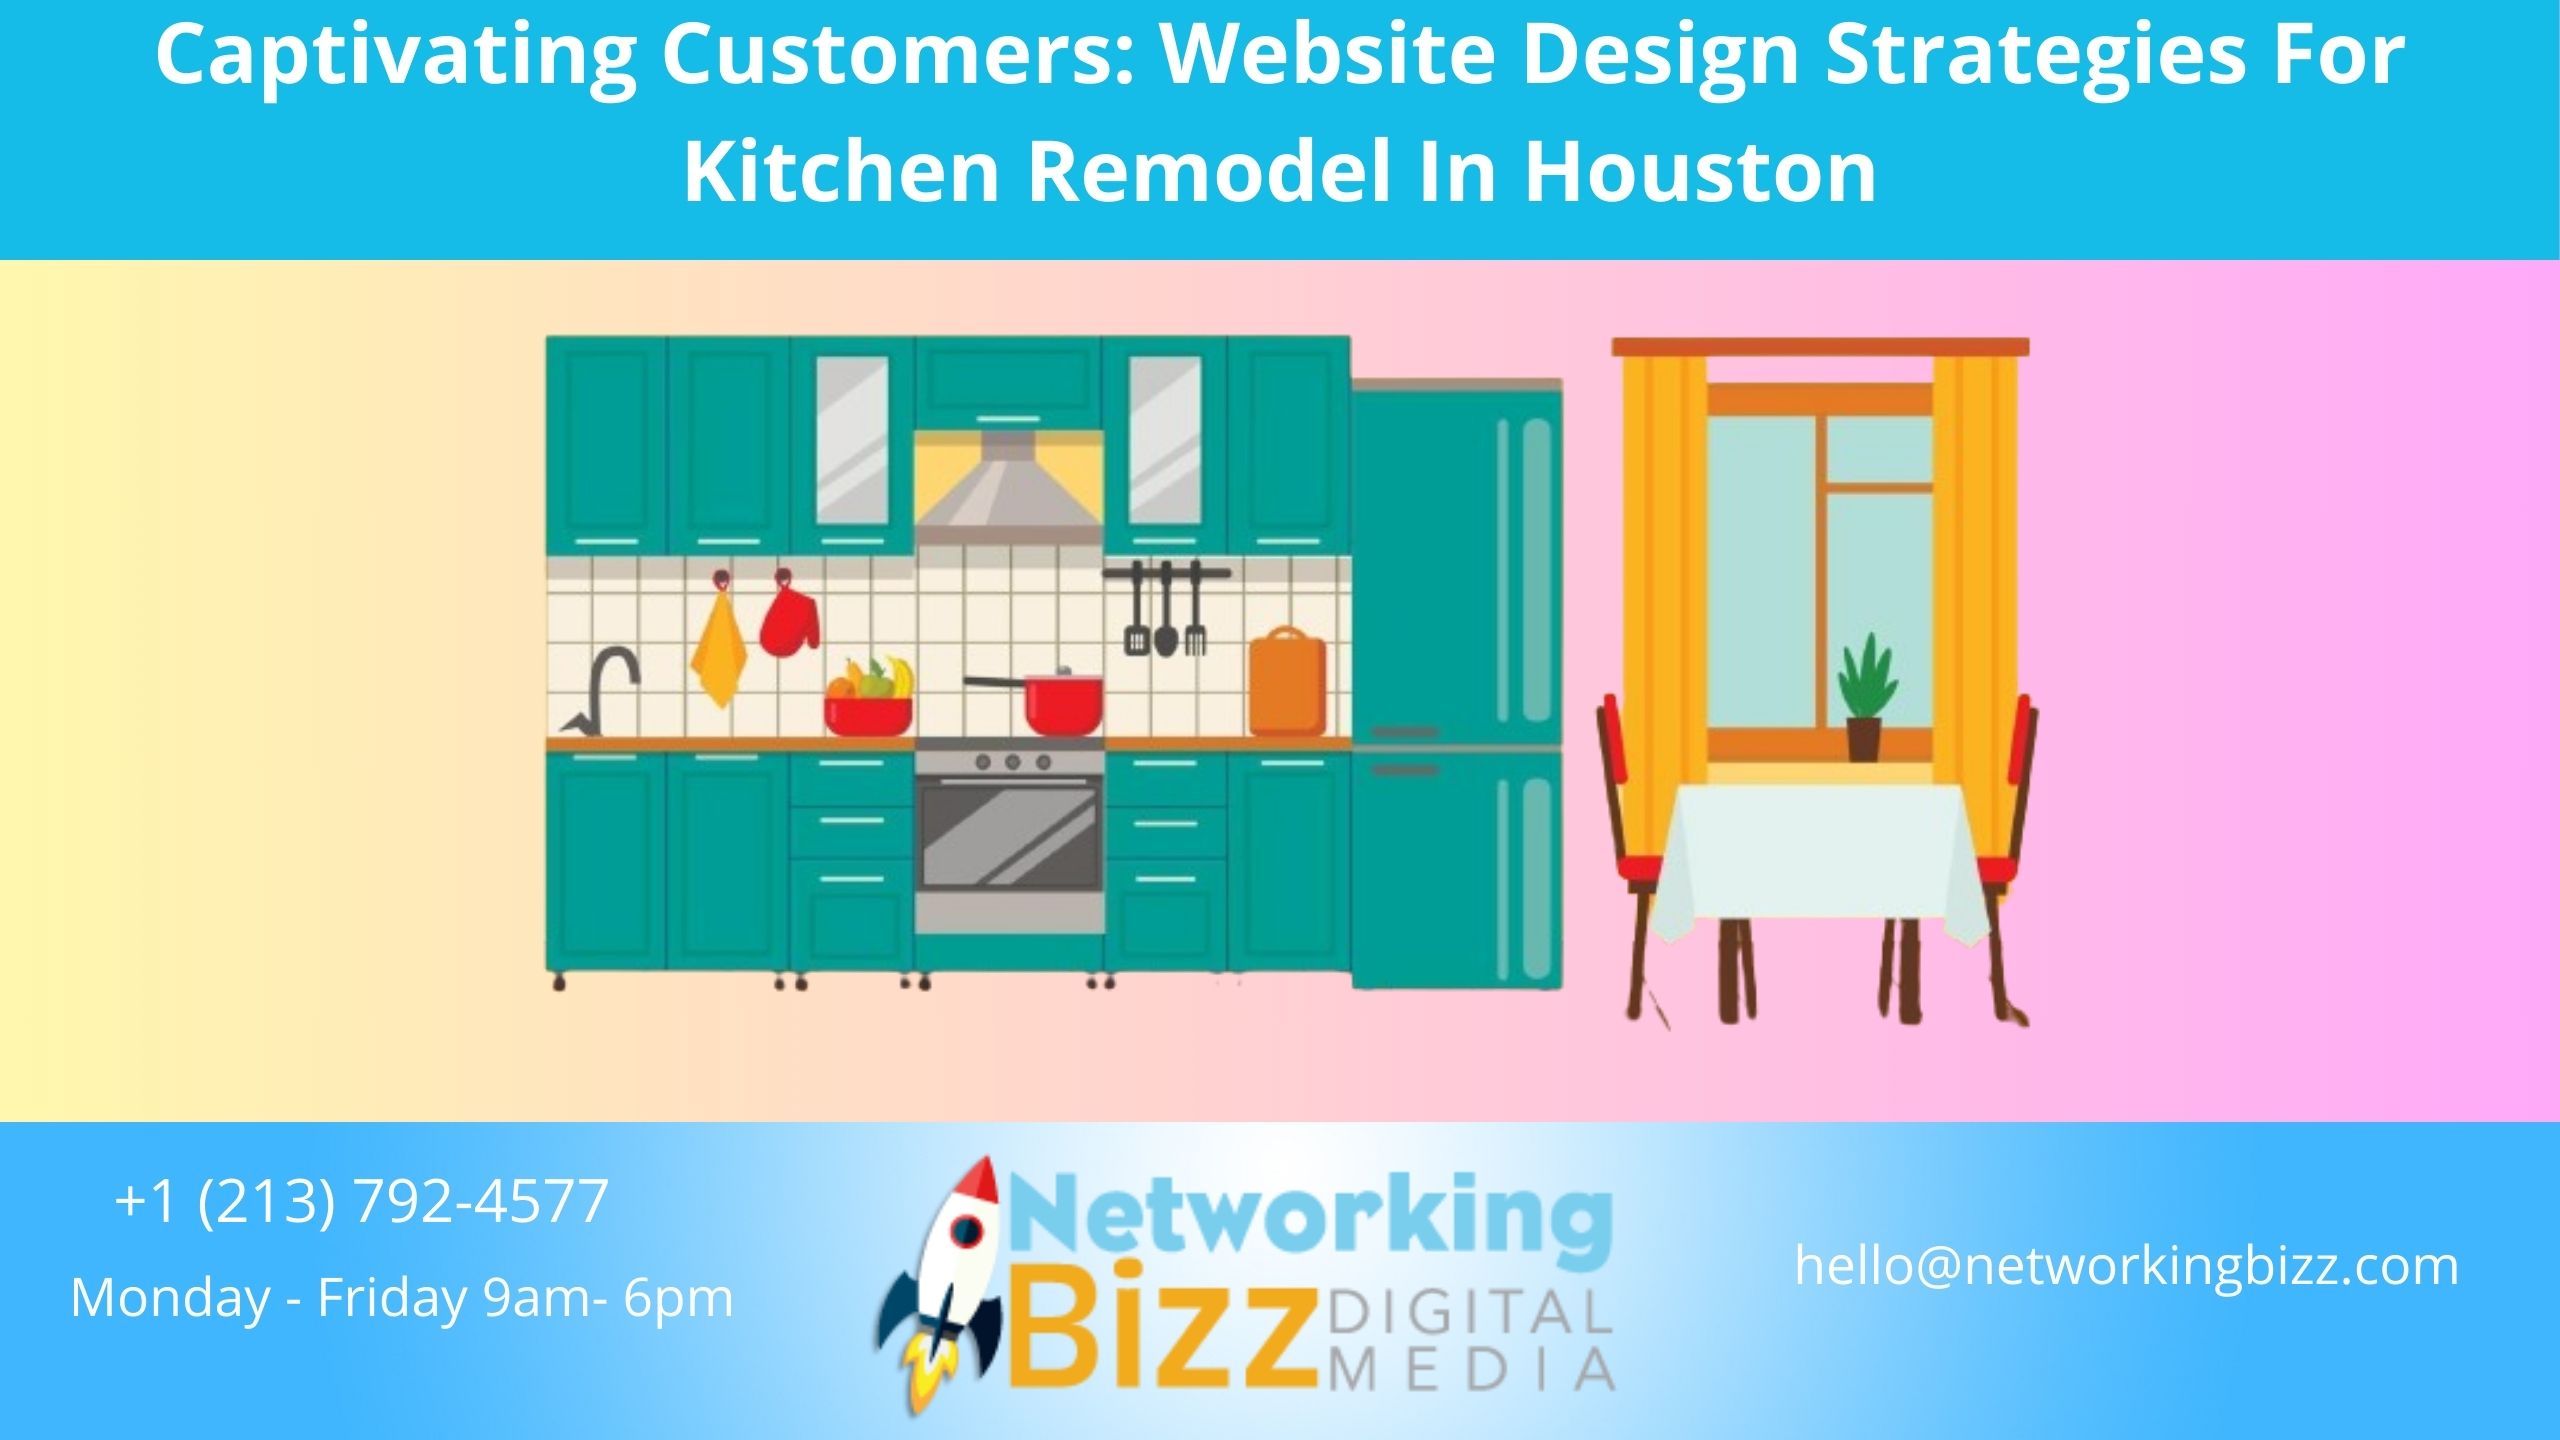 Captivating Customers: Website Design Strategies For Kitchen Remodel In Houston